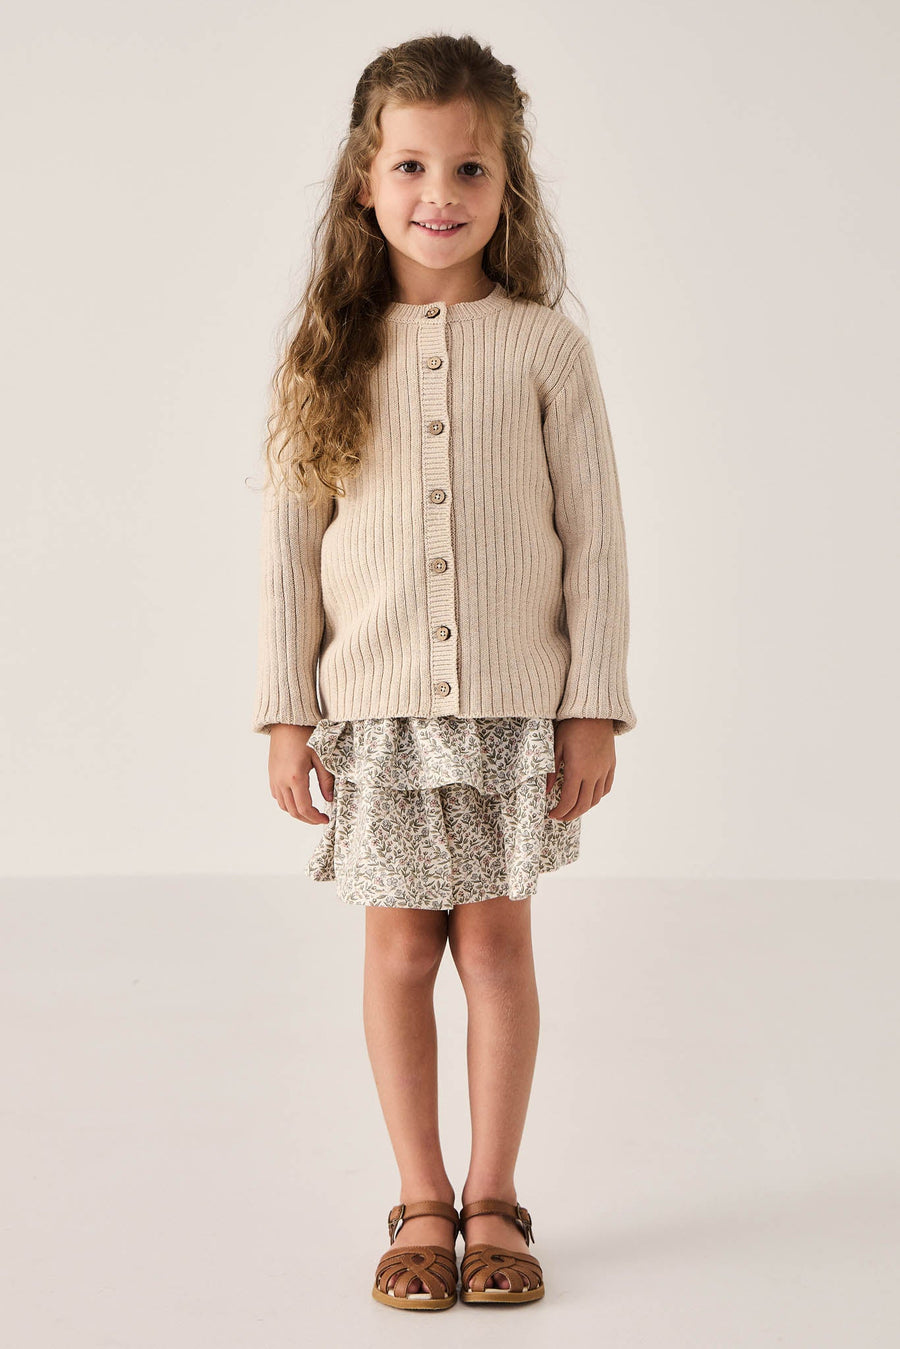 Organic Cotton Ruby Skirt - Ariella Eggnog Childrens Skirt from Jamie Kay USA